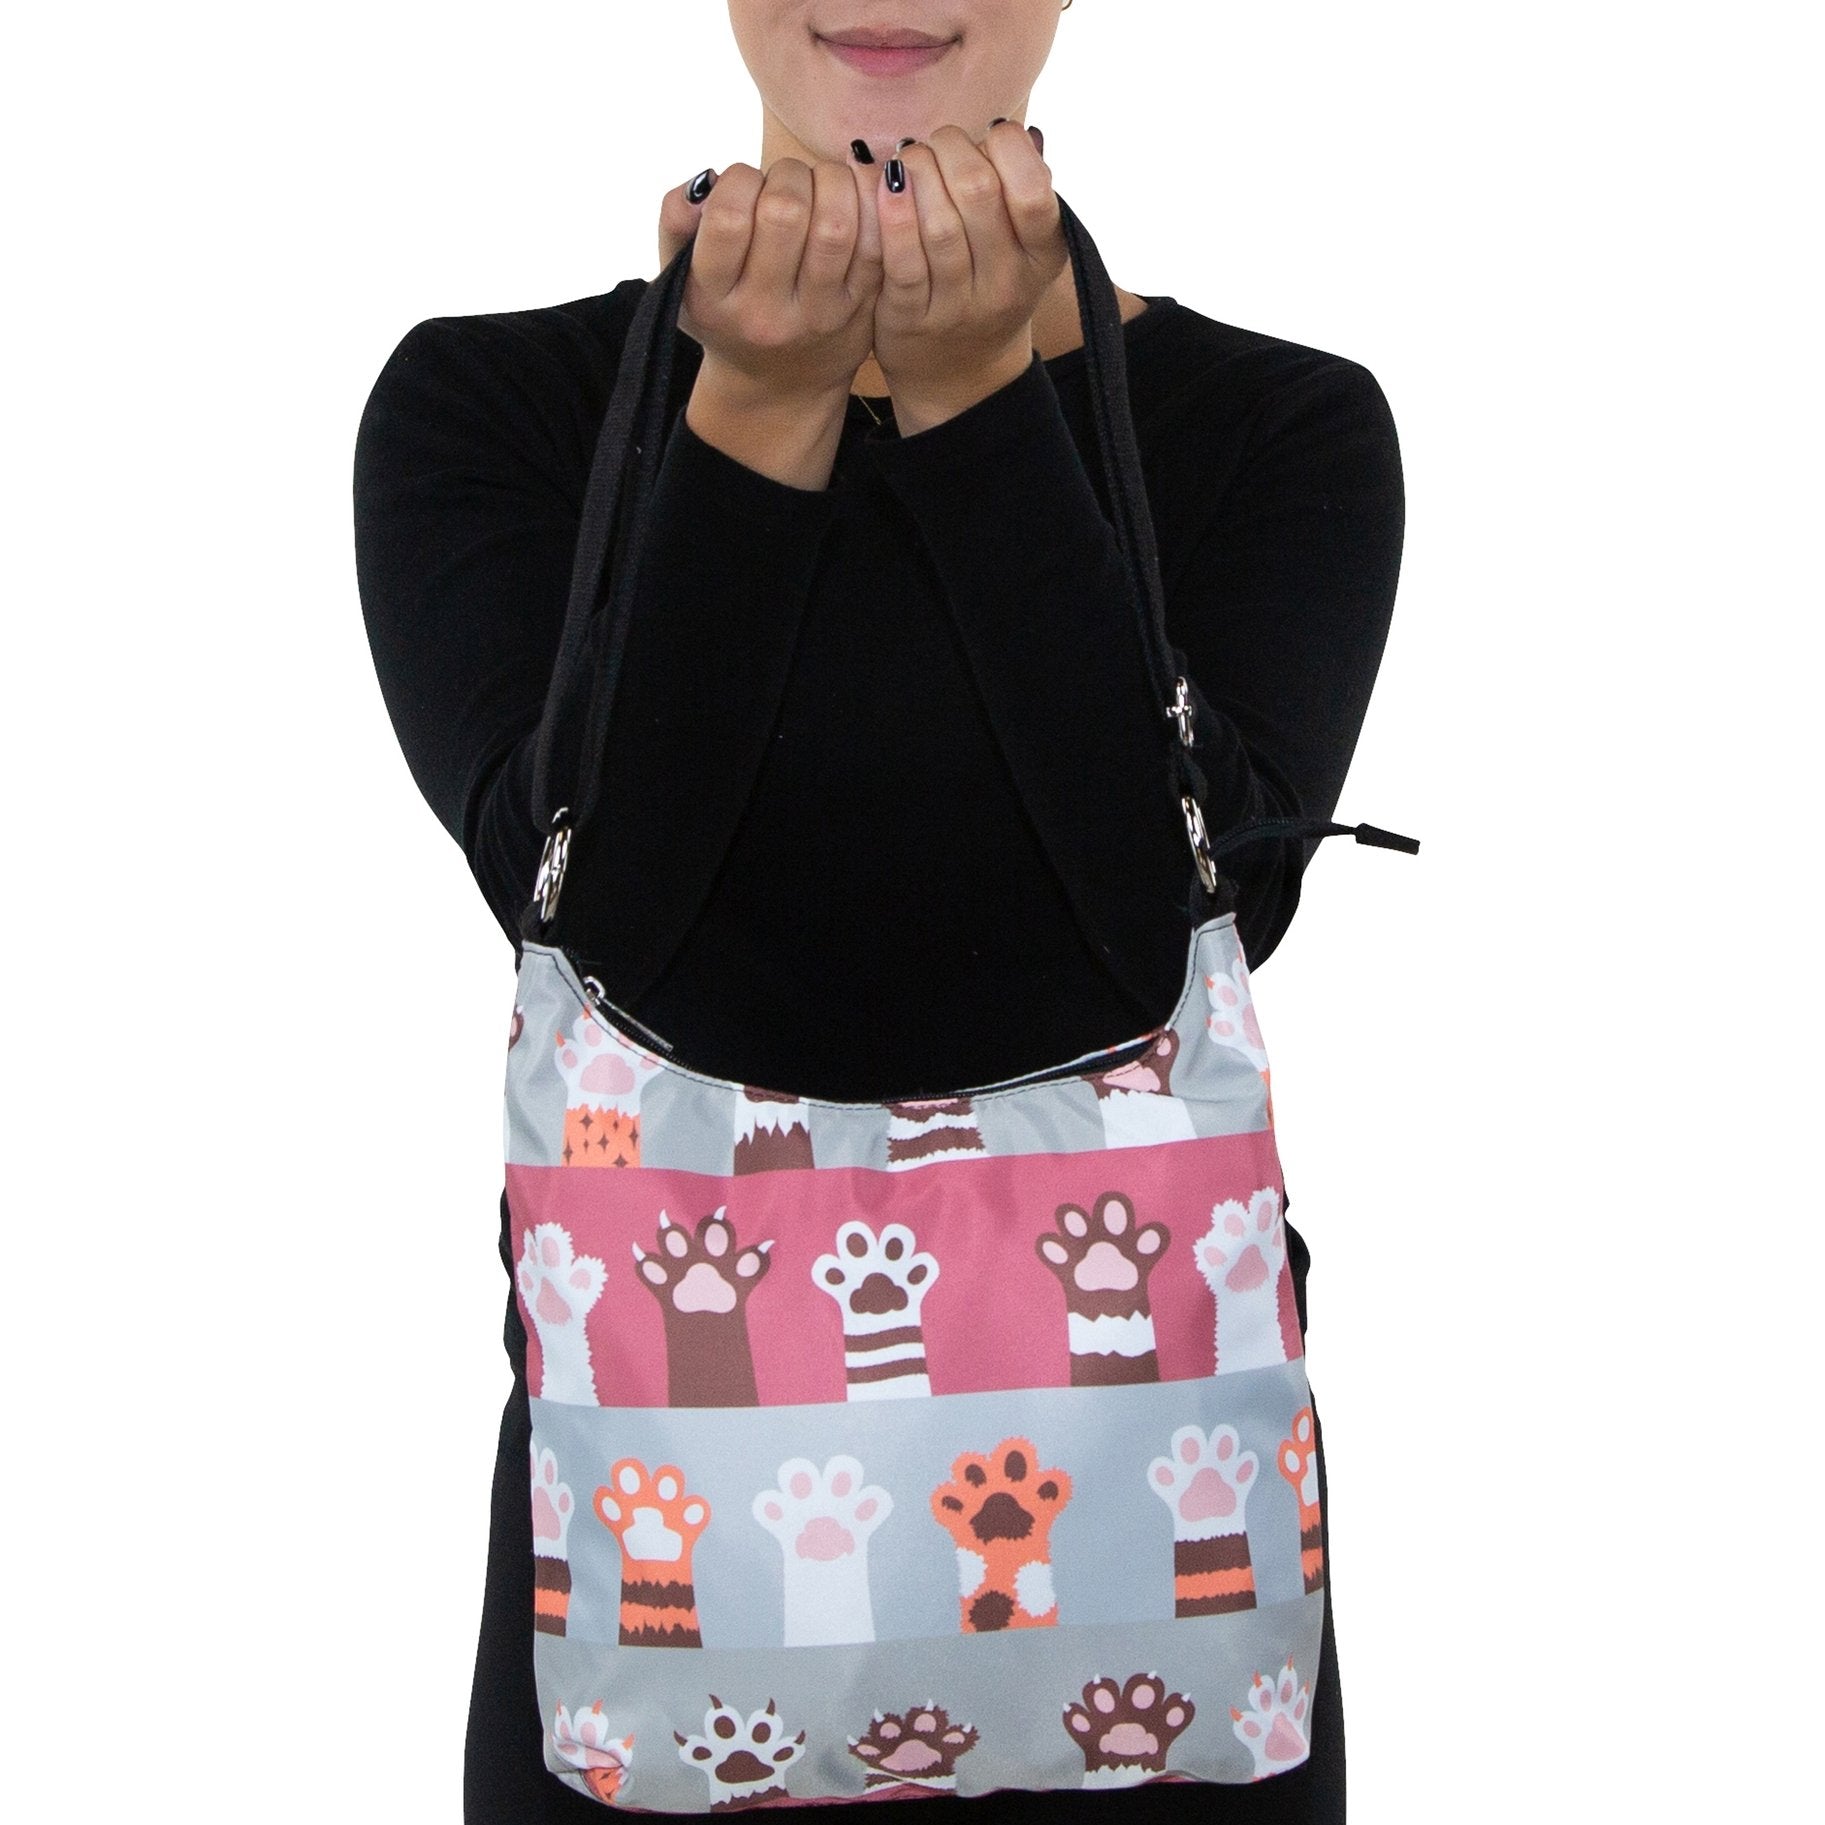 Paw Print Purse Handbag With An Adjustable Strap